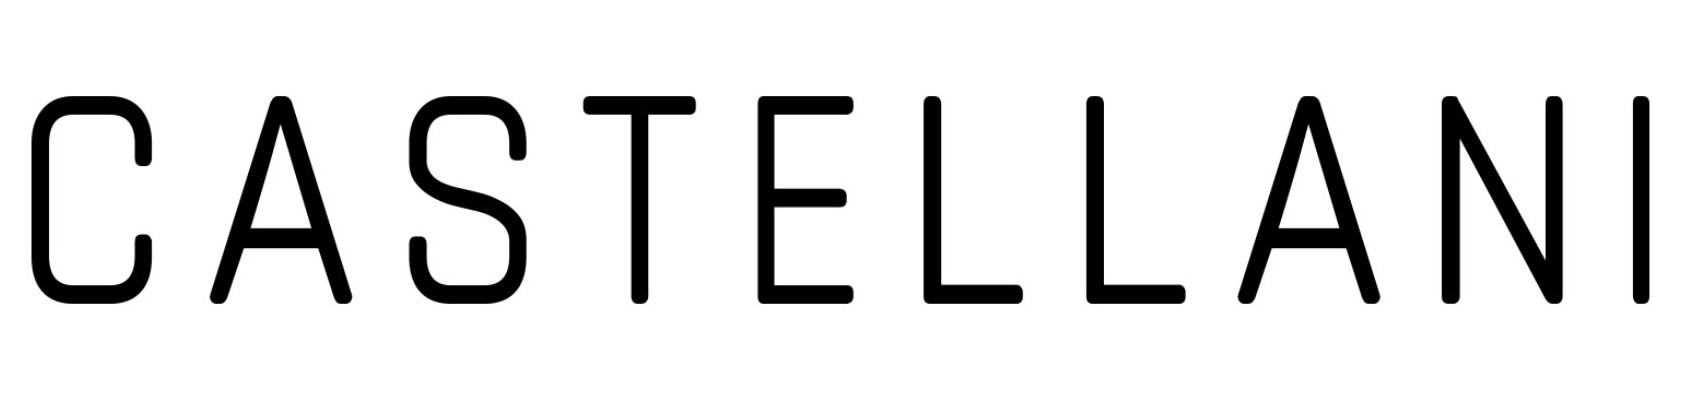 Castellani_Logo.jpg